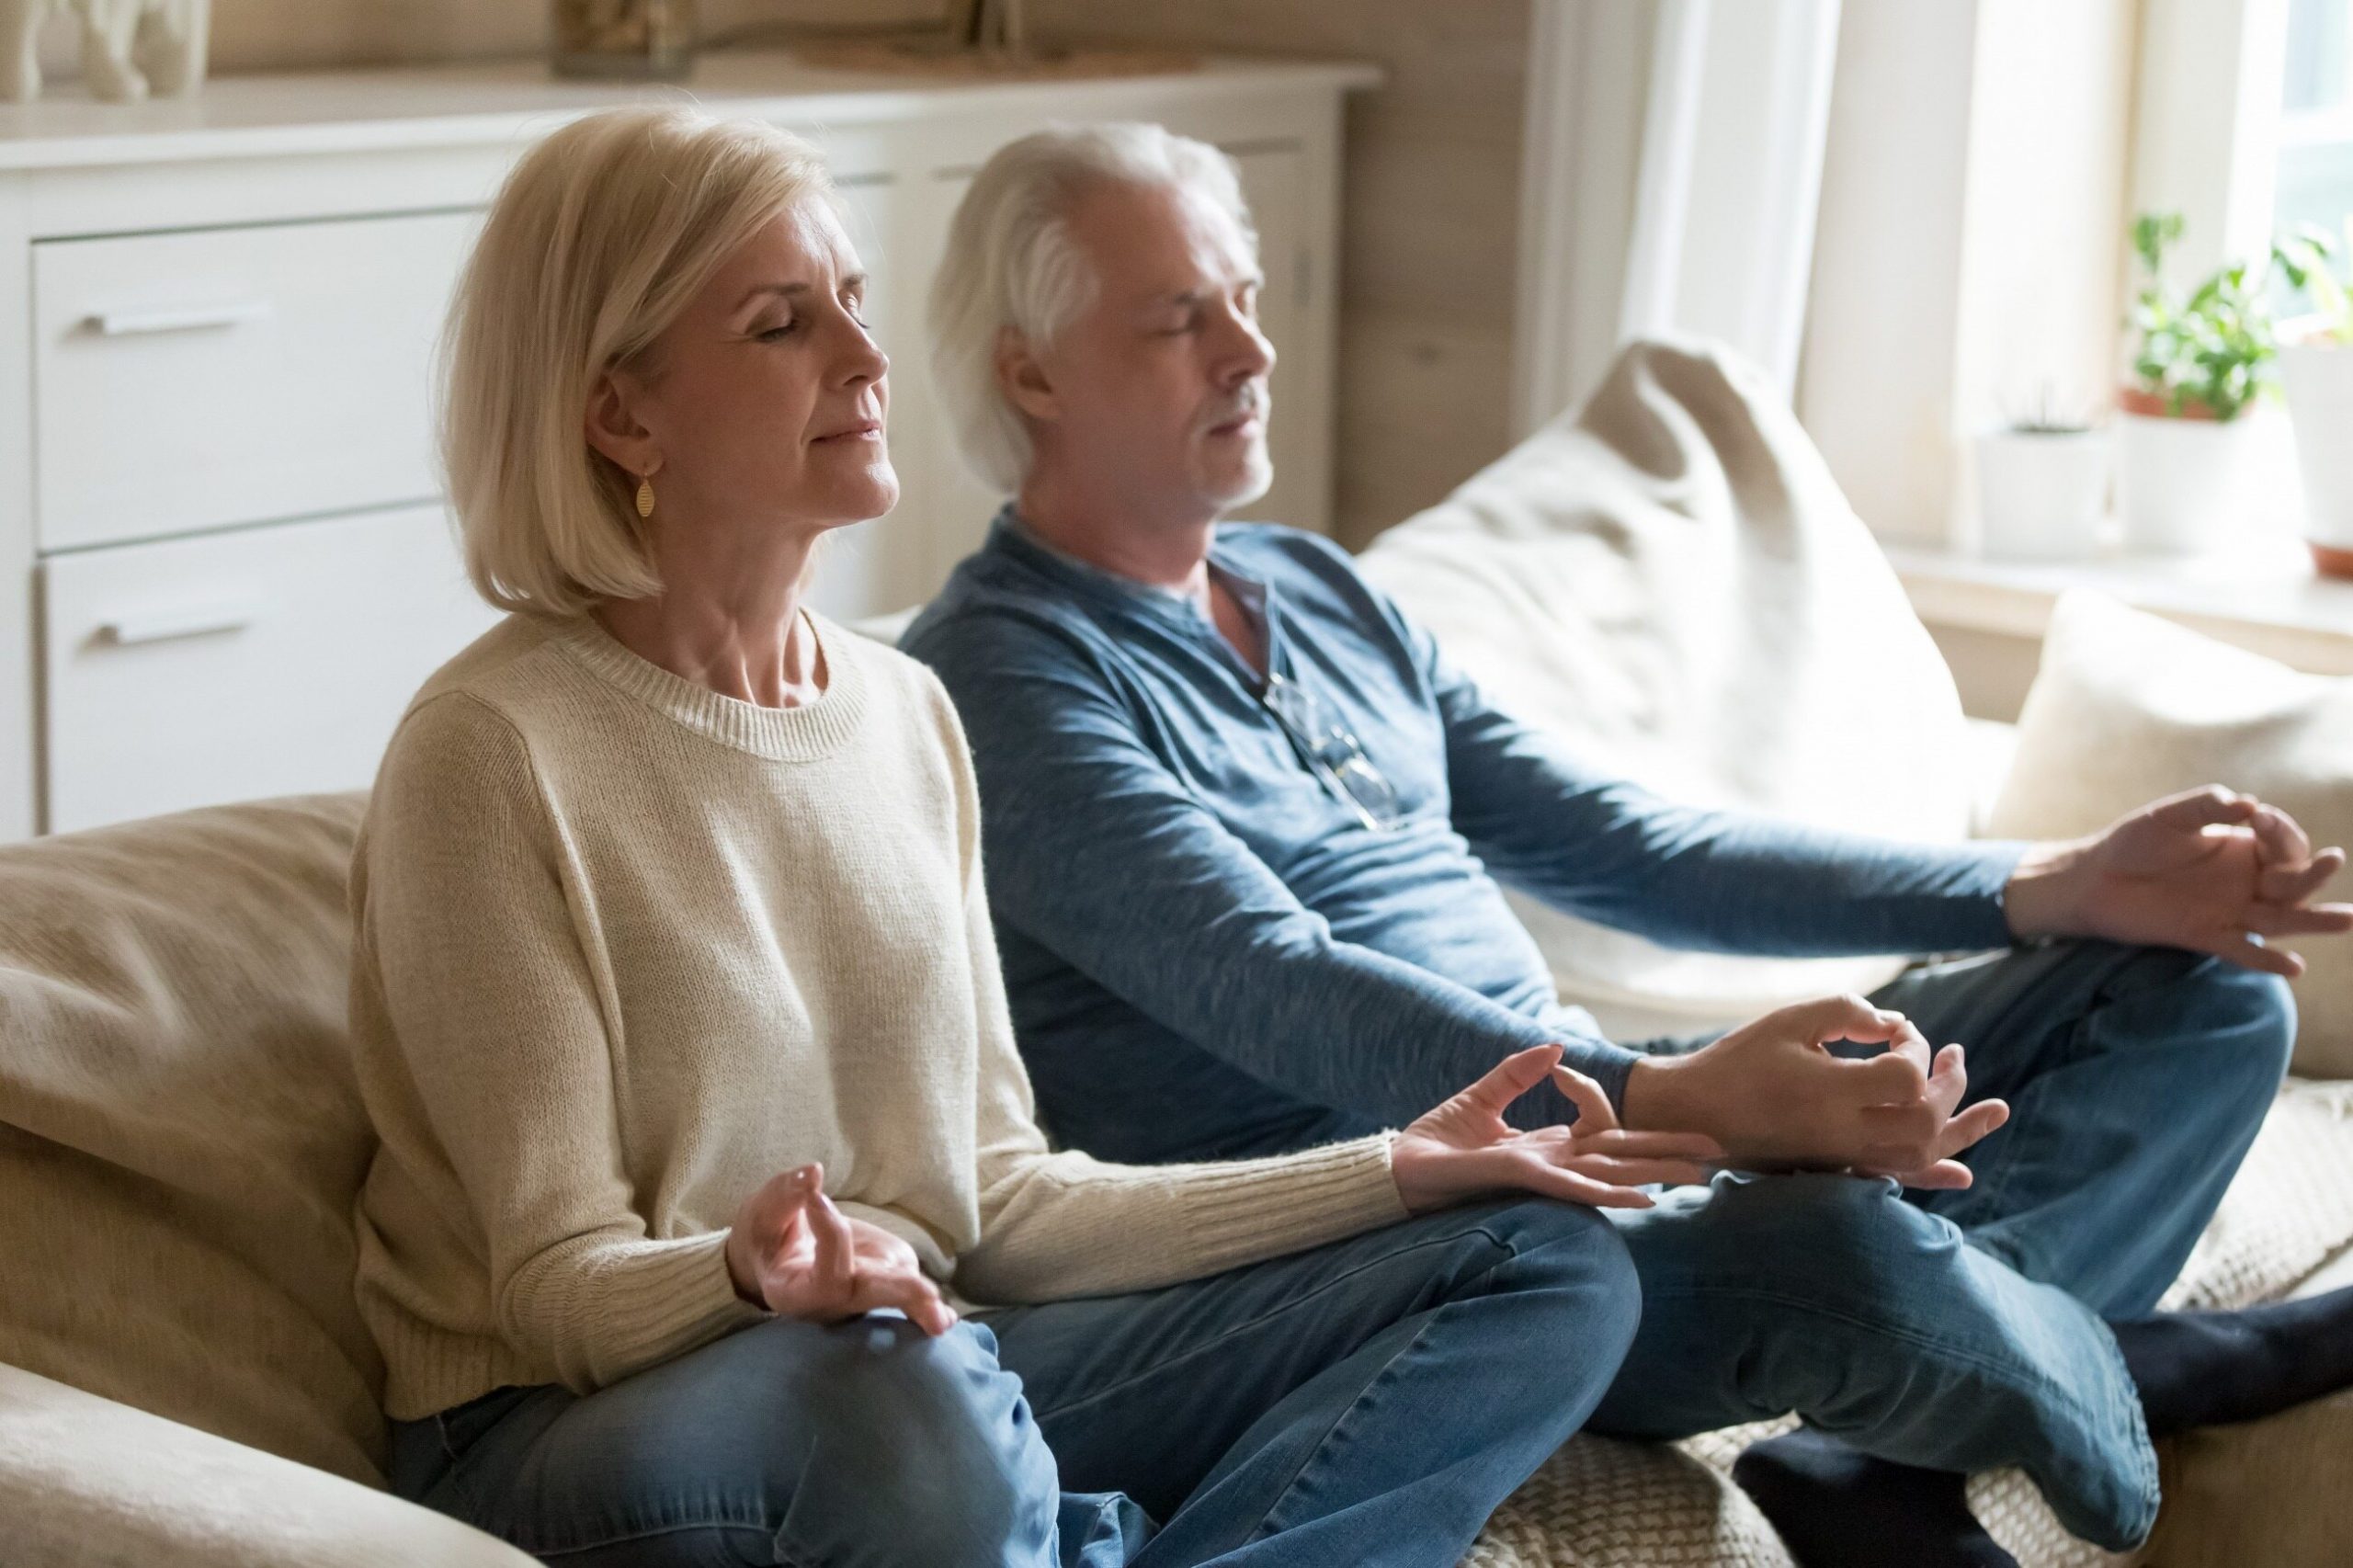 Mindfulness - Mindfulness training improves cognitive function in older adults